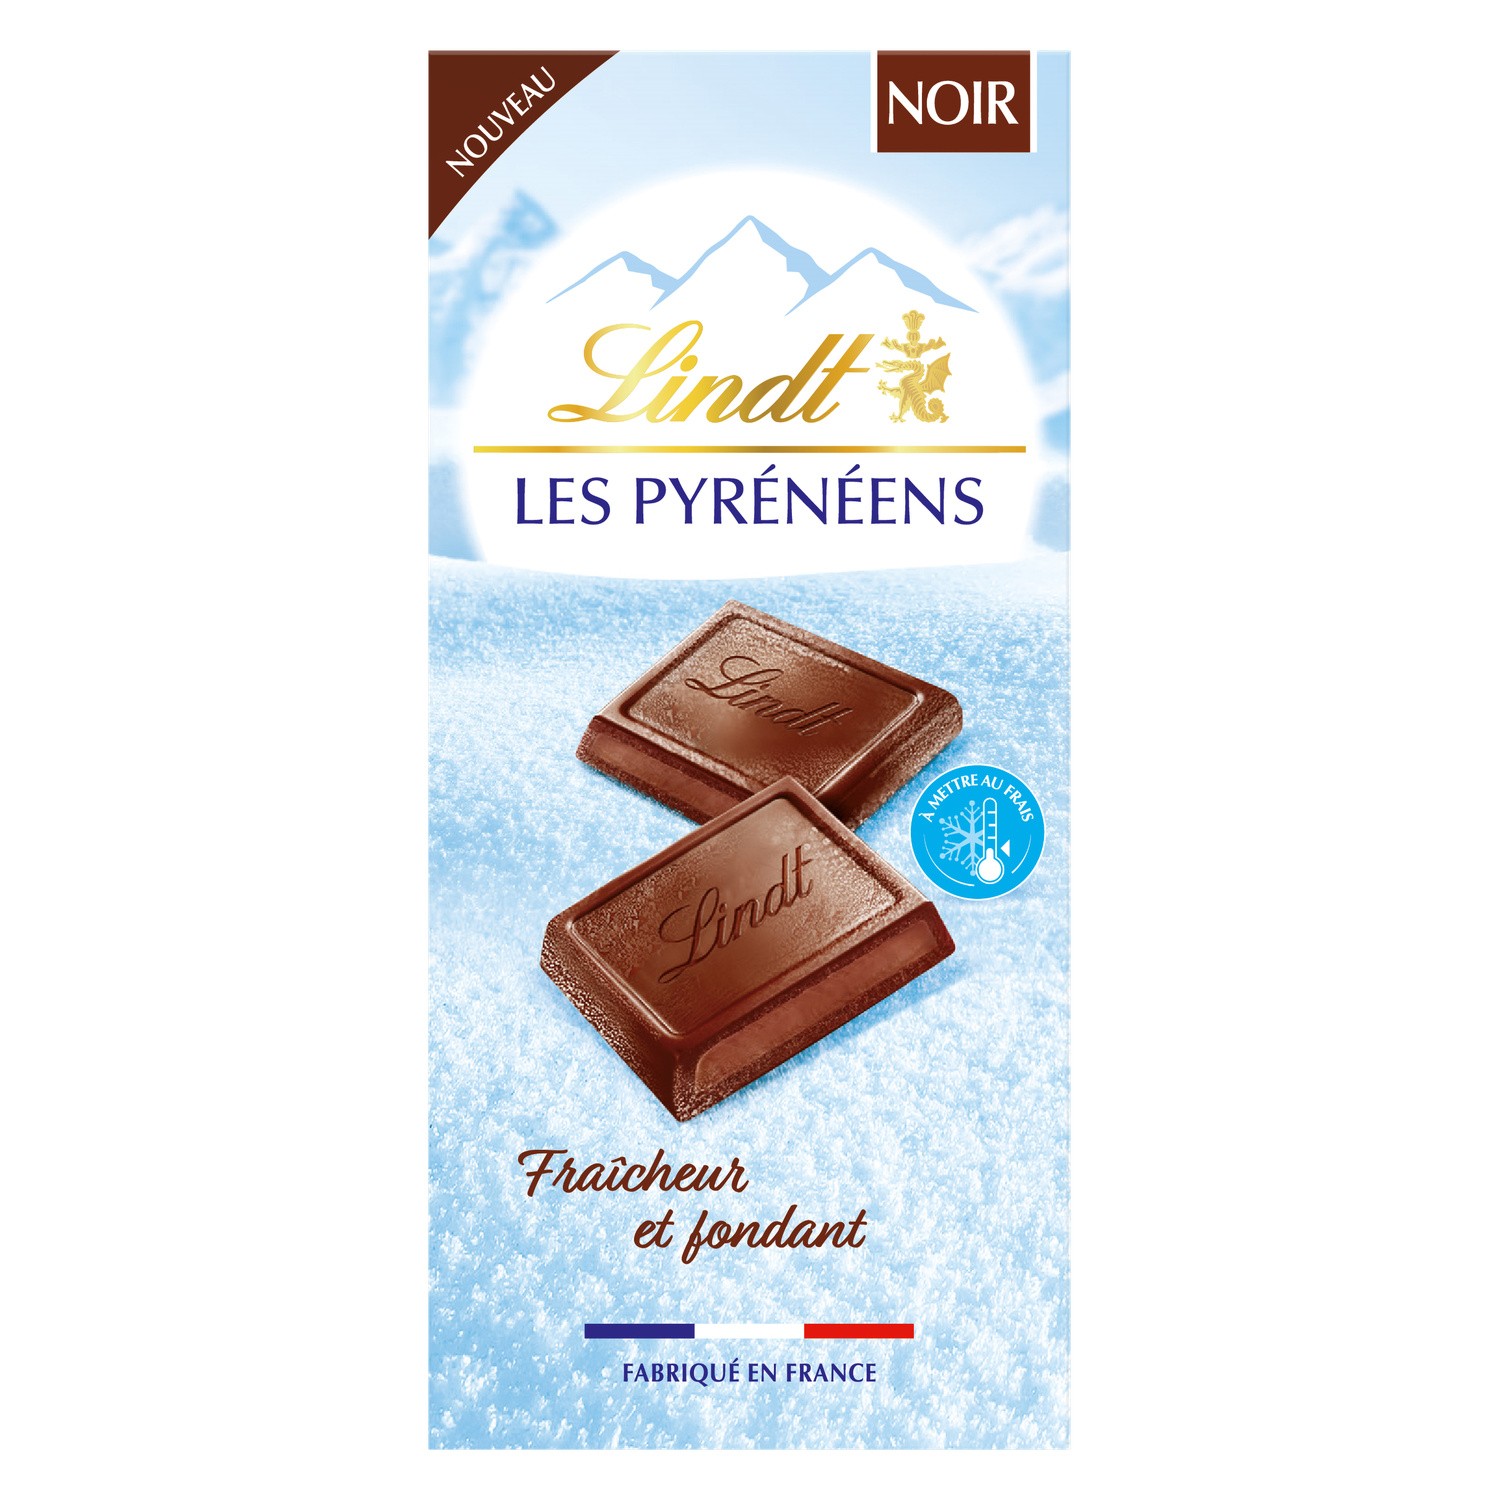 Lindt Les Pyrénéens Dark & Milk Chocolate, Buy Online